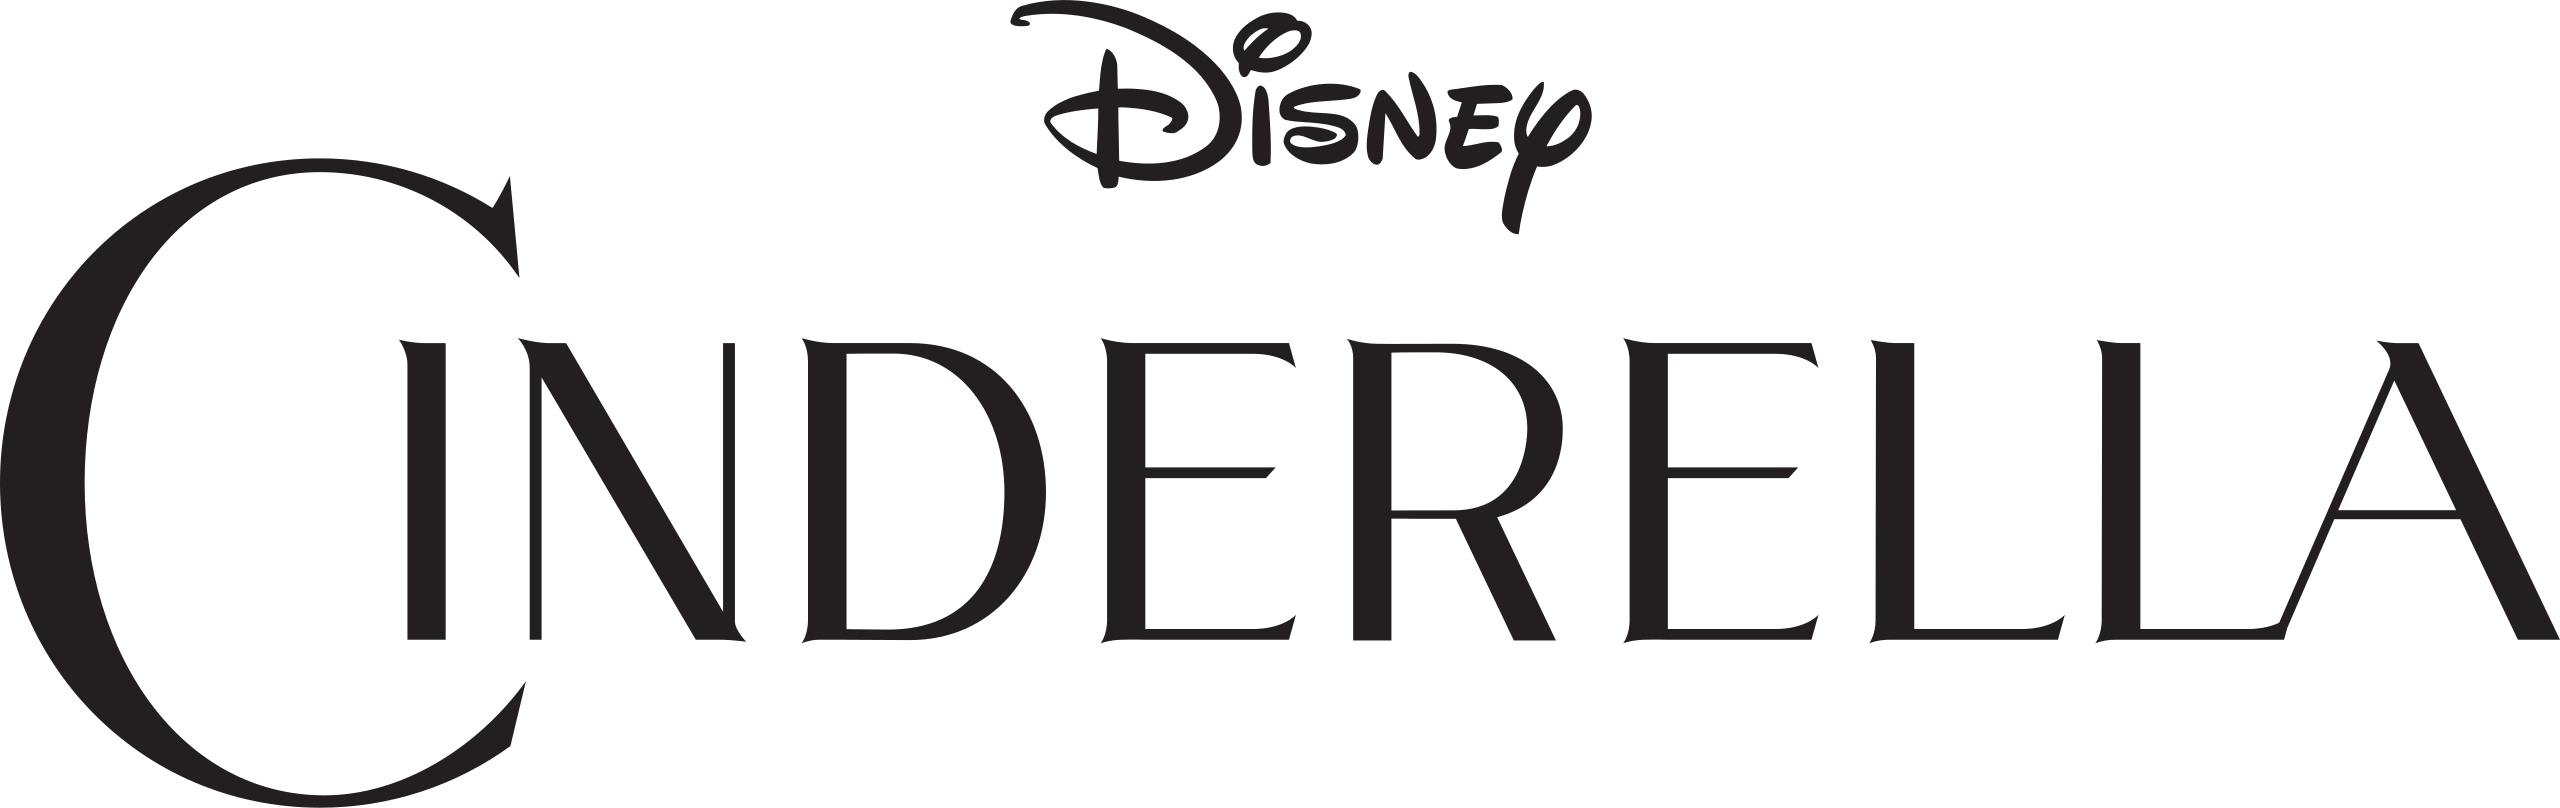 File:Cinderella (2015) Logo Wikipedia